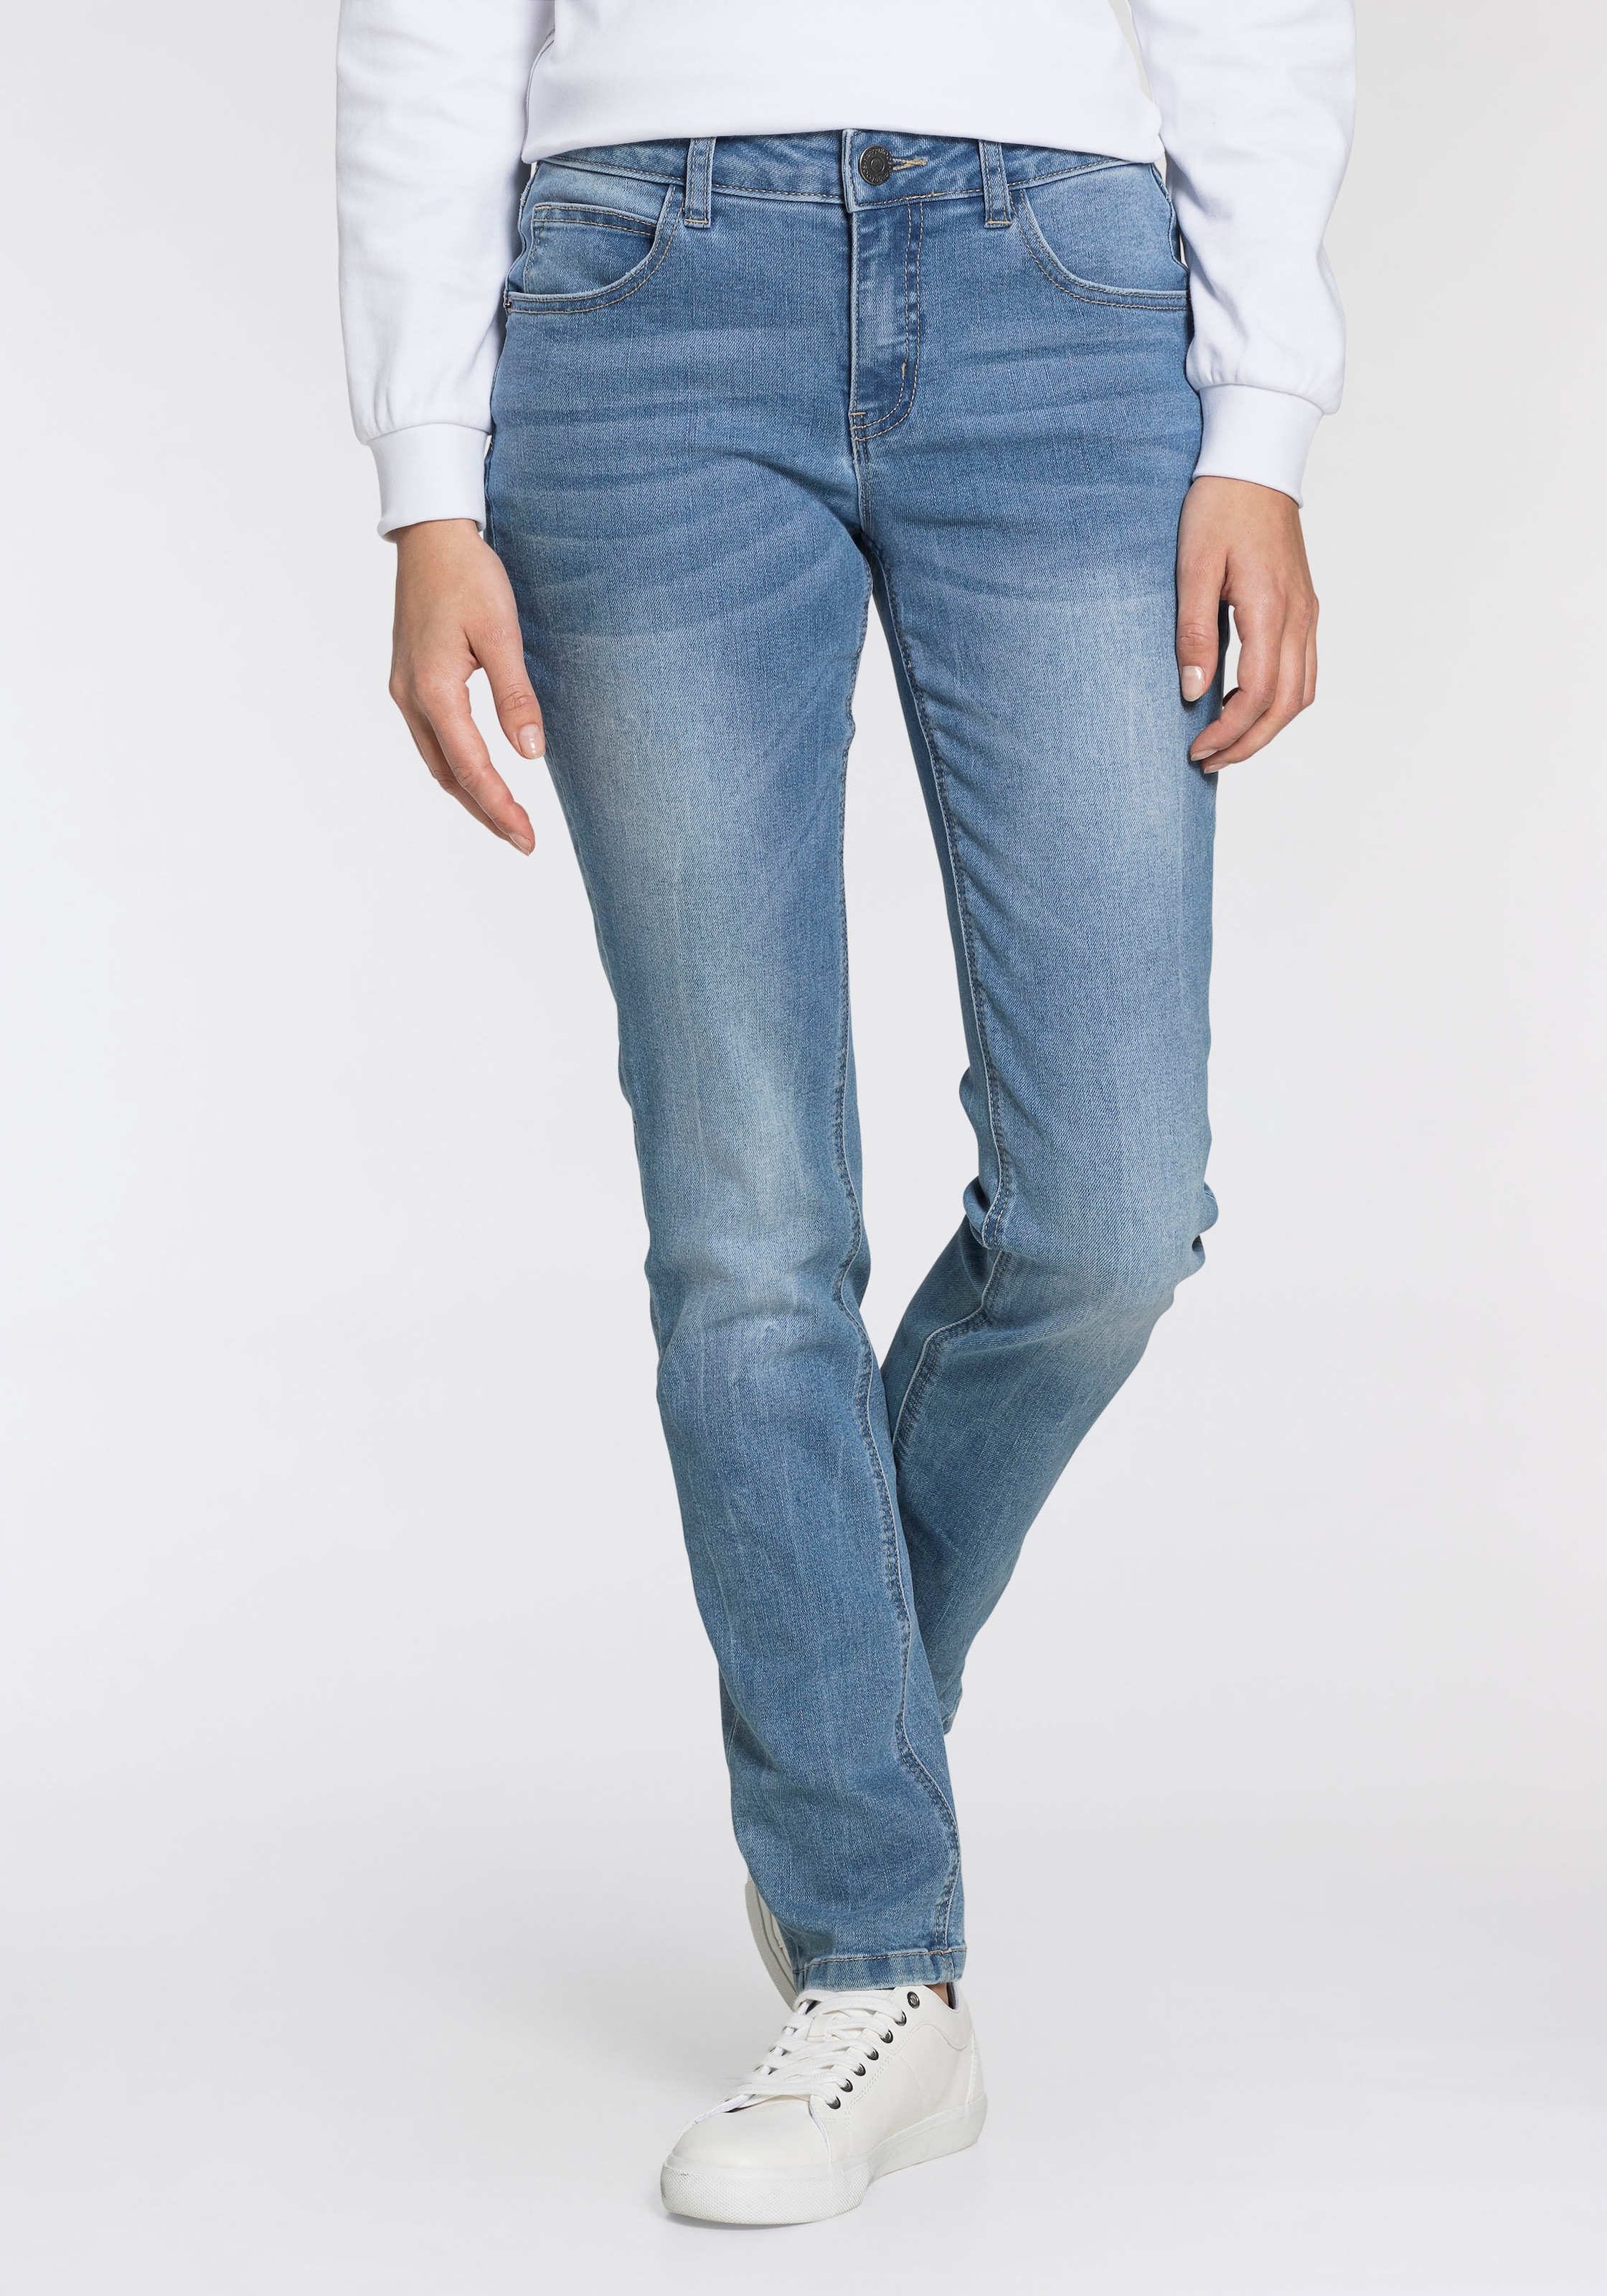 Trendige KangaROOS Jeans kaufen jetzt ♕ online